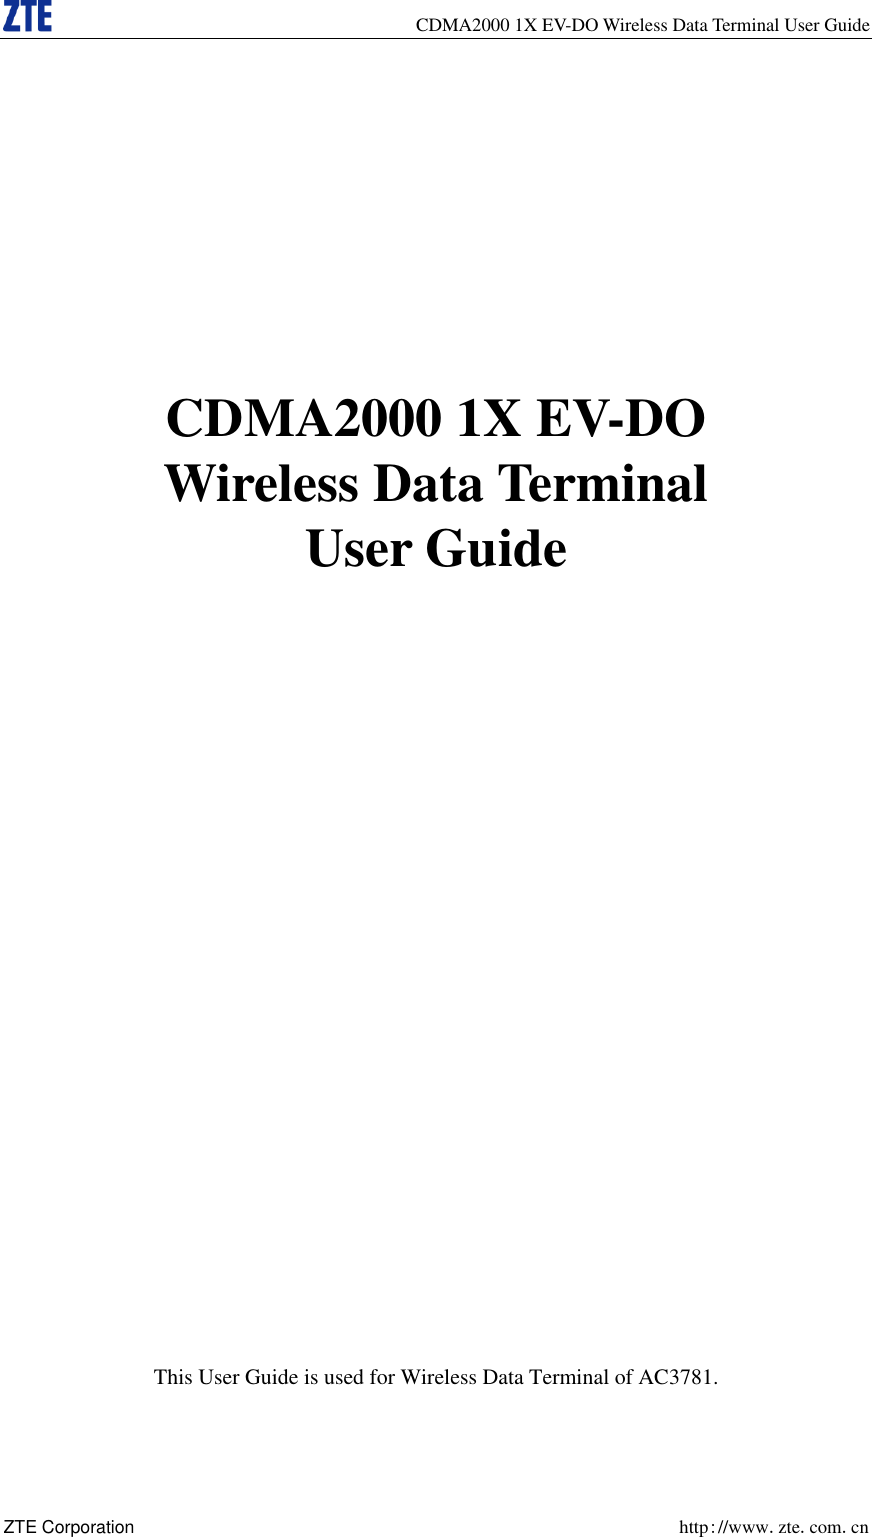   CDMA2000 1X EV-DO Wireless Data Terminal User Guide ZTE Corporation    http://www.zte.com.cn        CDMA2000 1X EV-DO Wireless Data Terminal User Guide                         This User Guide is used for Wireless Data Terminal of AC3781. 